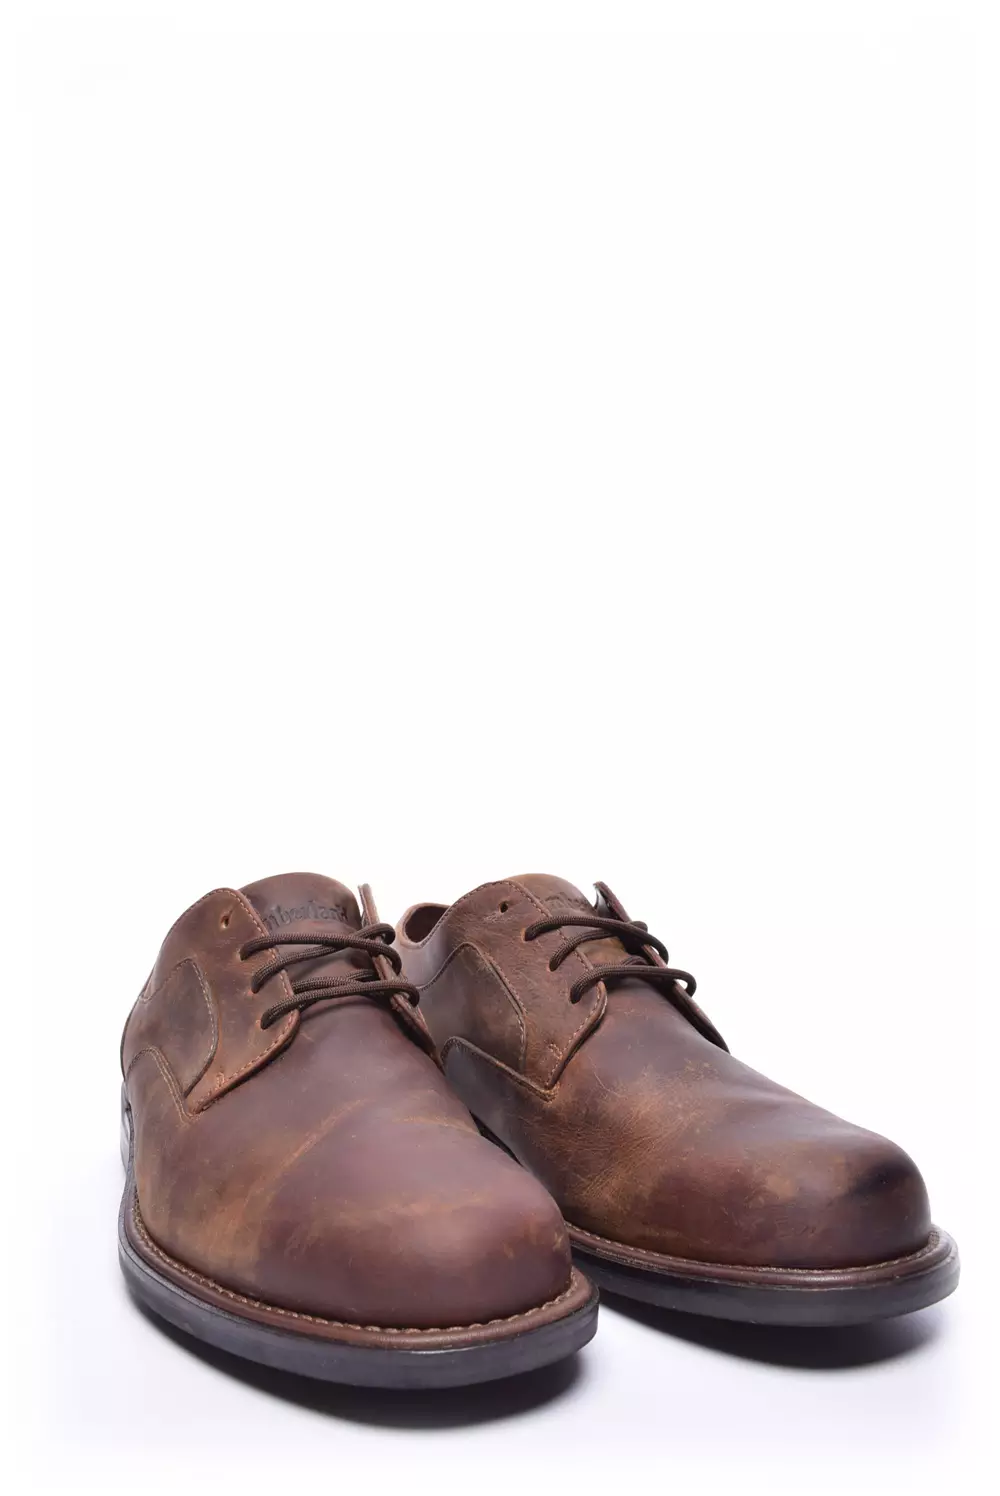 Pantofi barbati impermeabili cu aspect vintage [3]